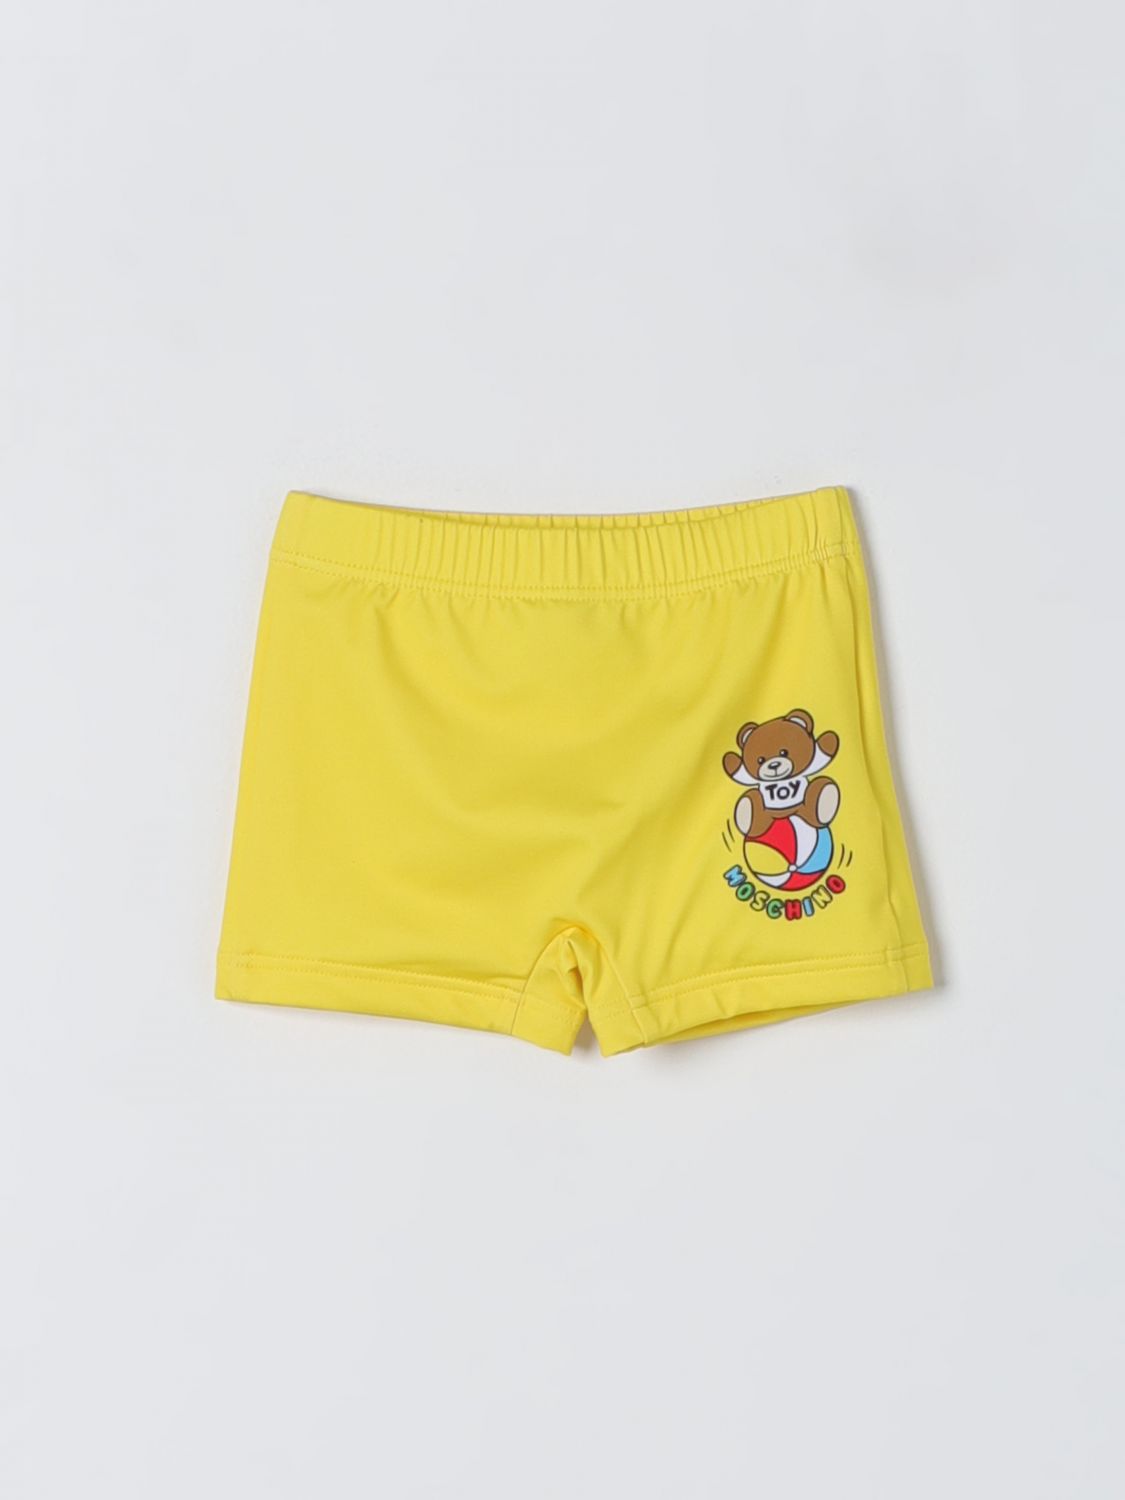 Moschino Baby Swimsuit  Kids Colour Yellow